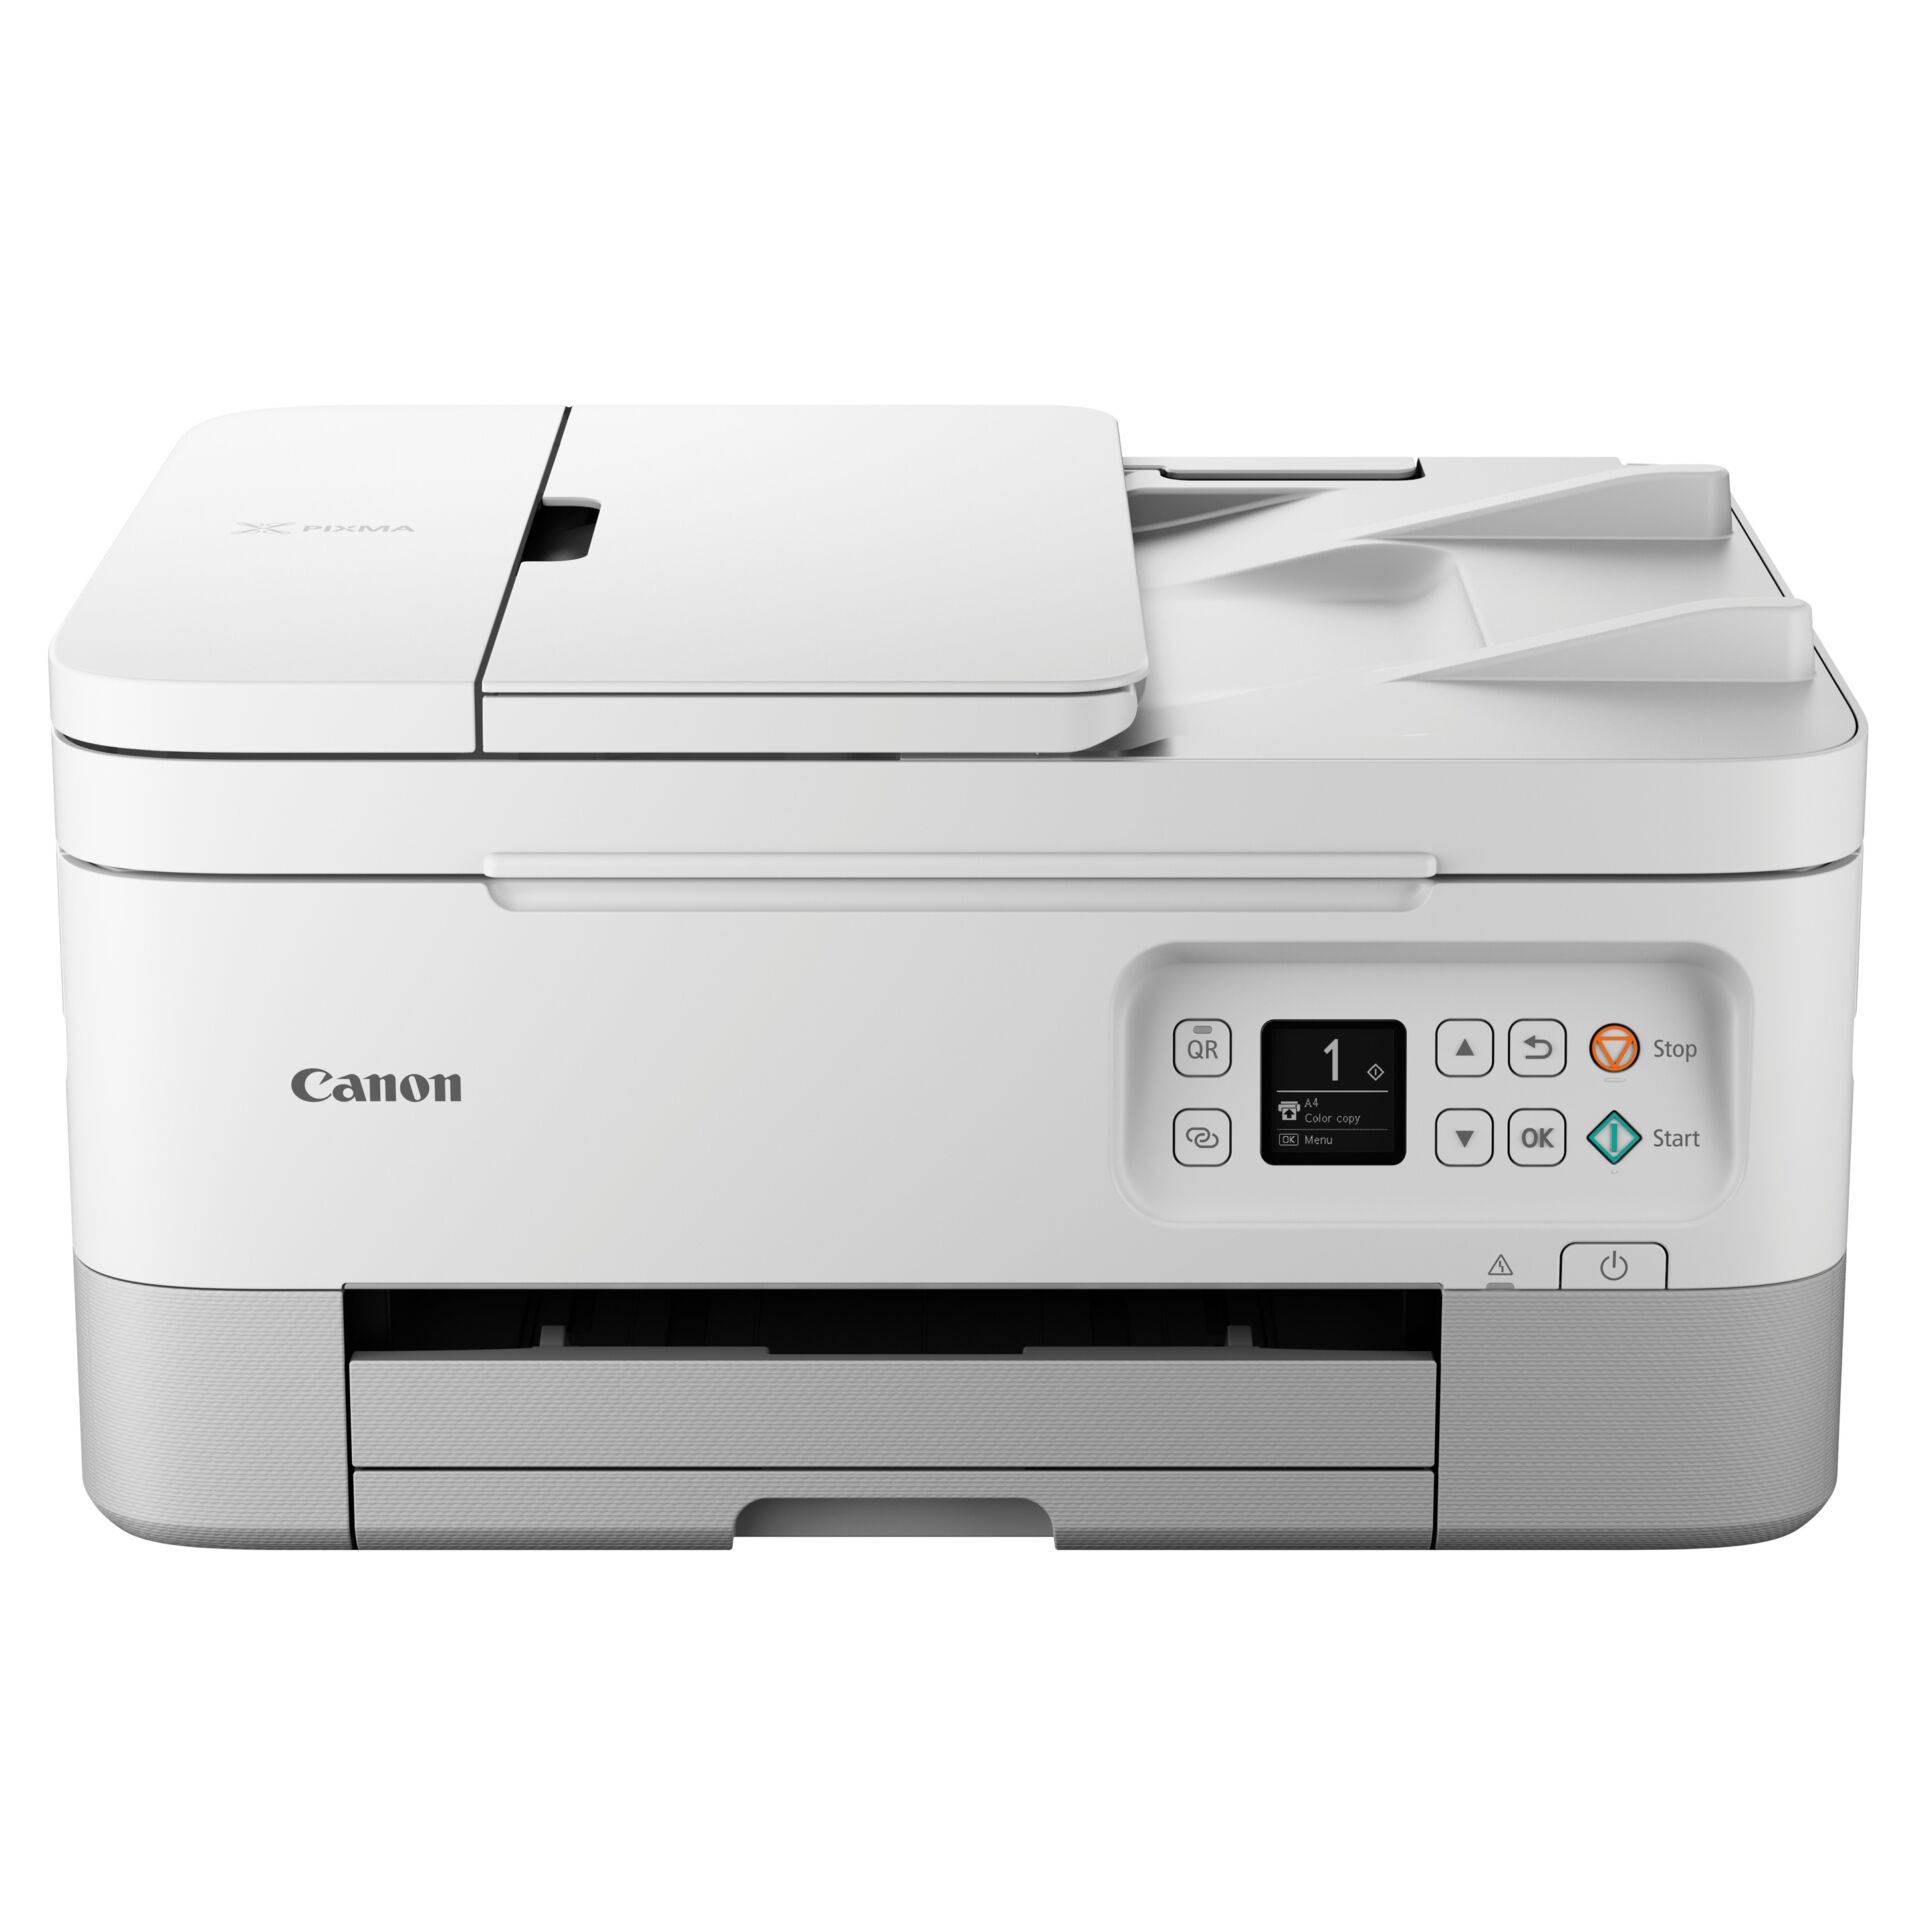 Canon PIXMA TS7451a weiß, Tinte, mehrfarbig-Multifunktions- gerät, Drucker/Scanner/Kopierer